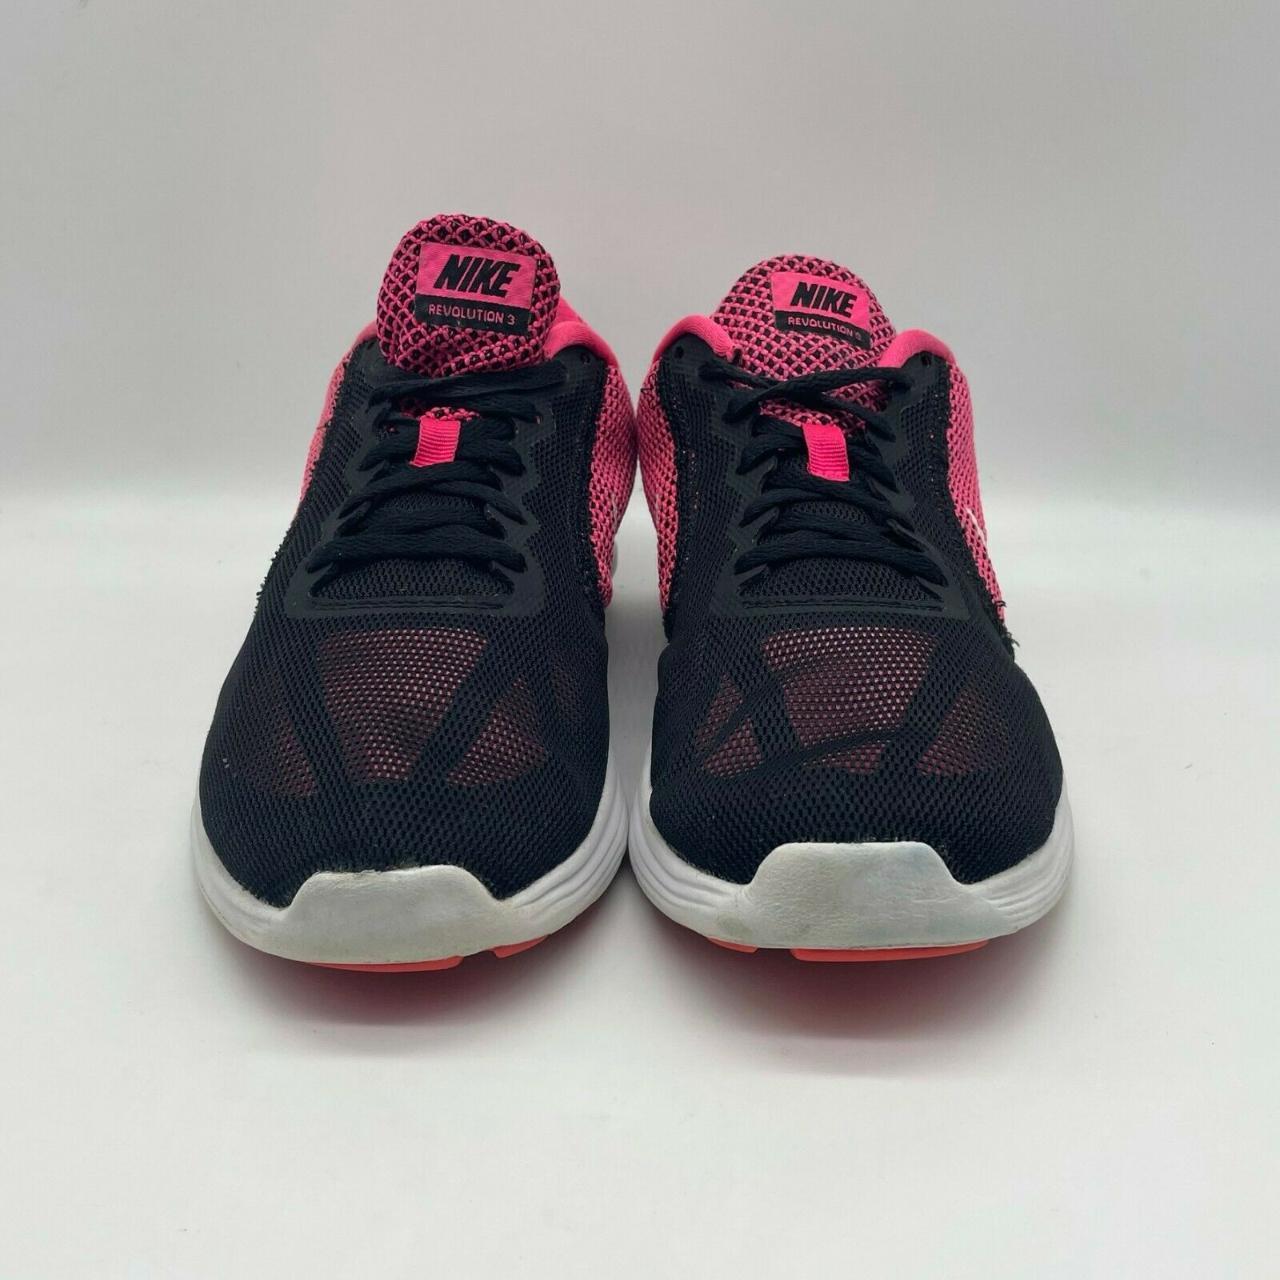 Nike Revolution 3 Black / Pink Women's Mesh Running... - Depop